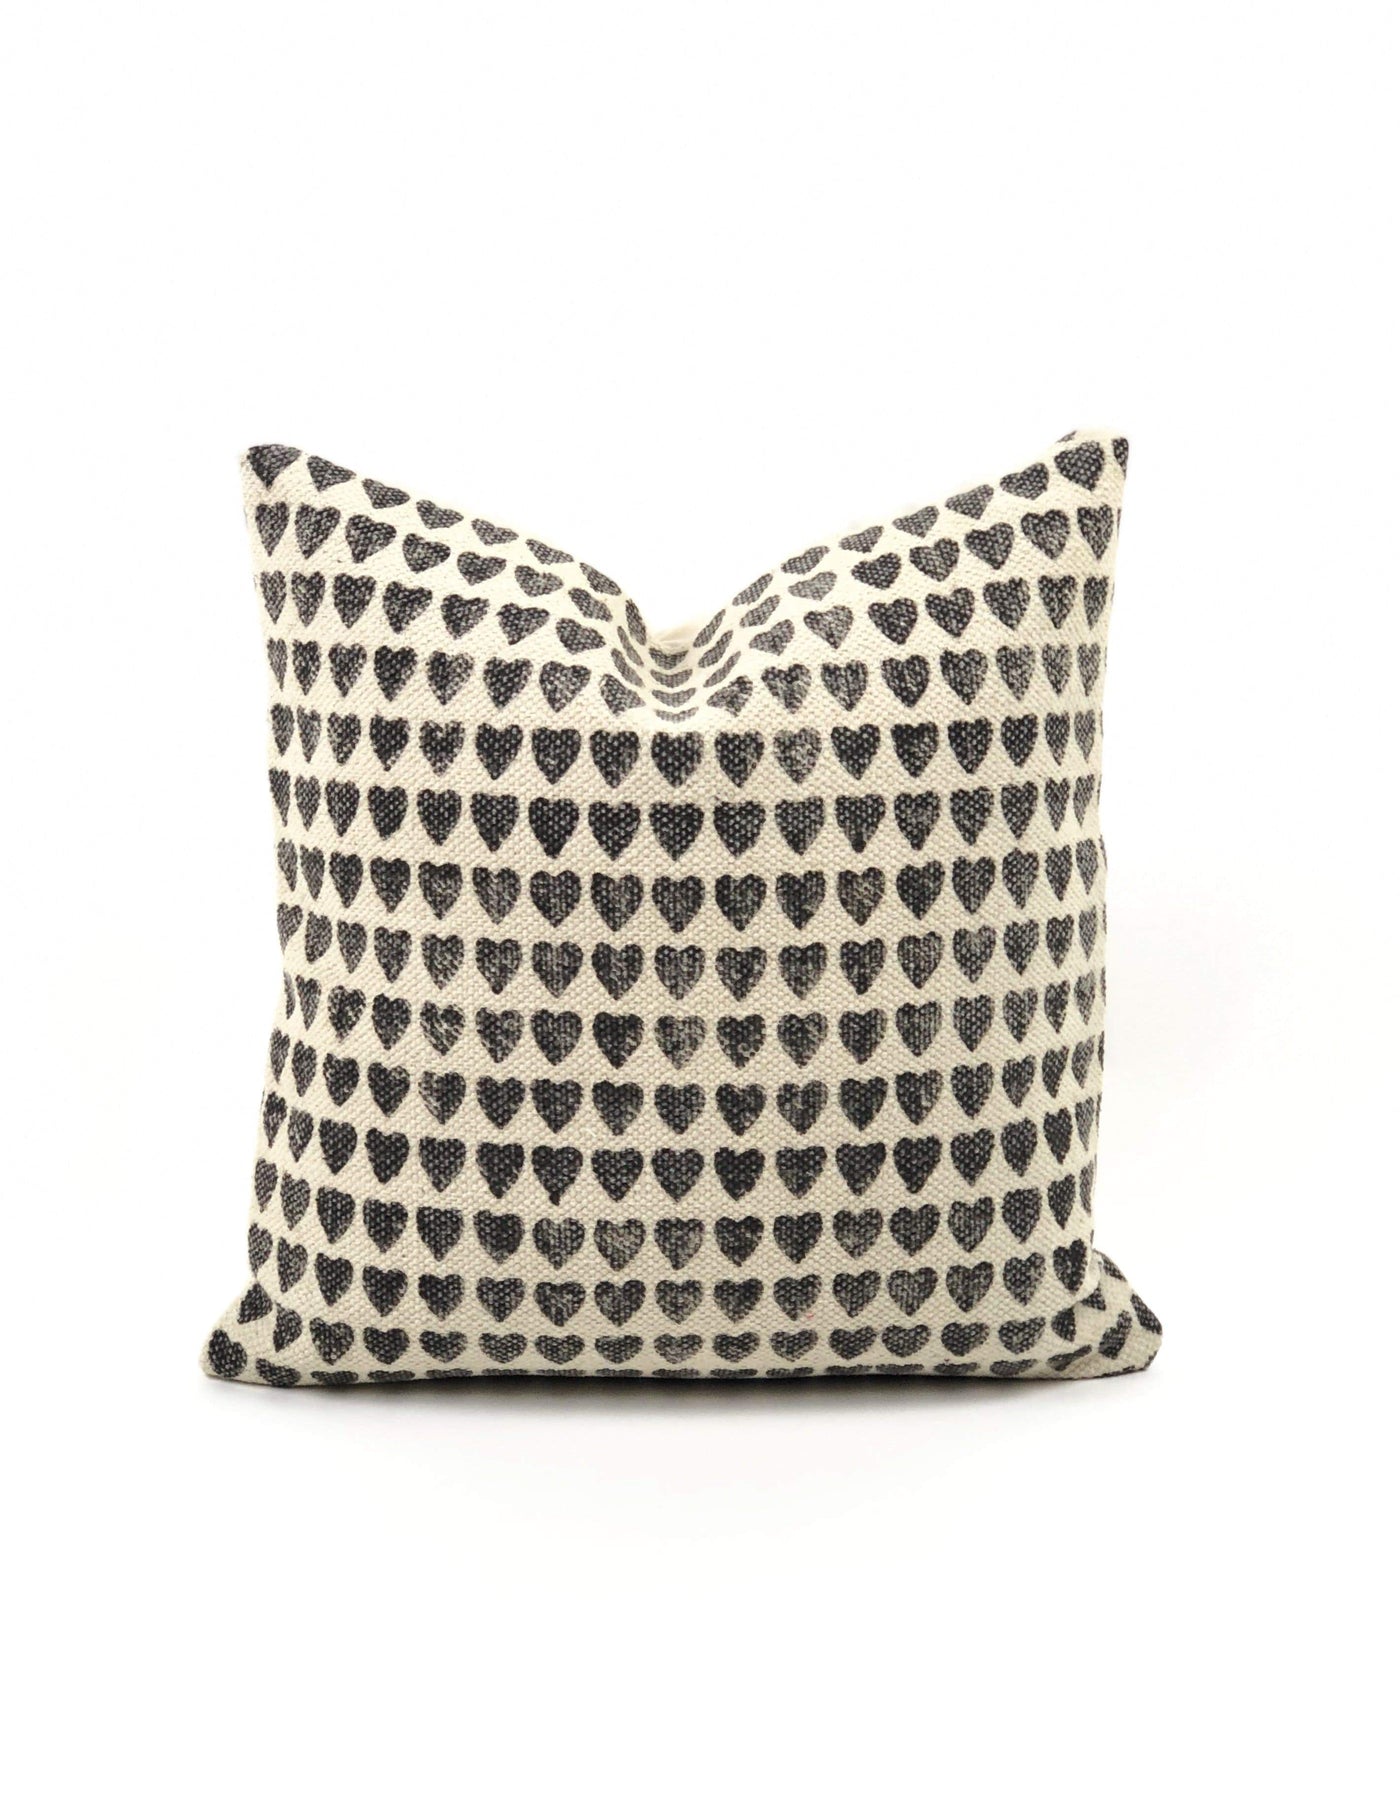 Bryar Wolf Handmade Decorative Throw Pillows With Insert / 20" x 20" LOVE